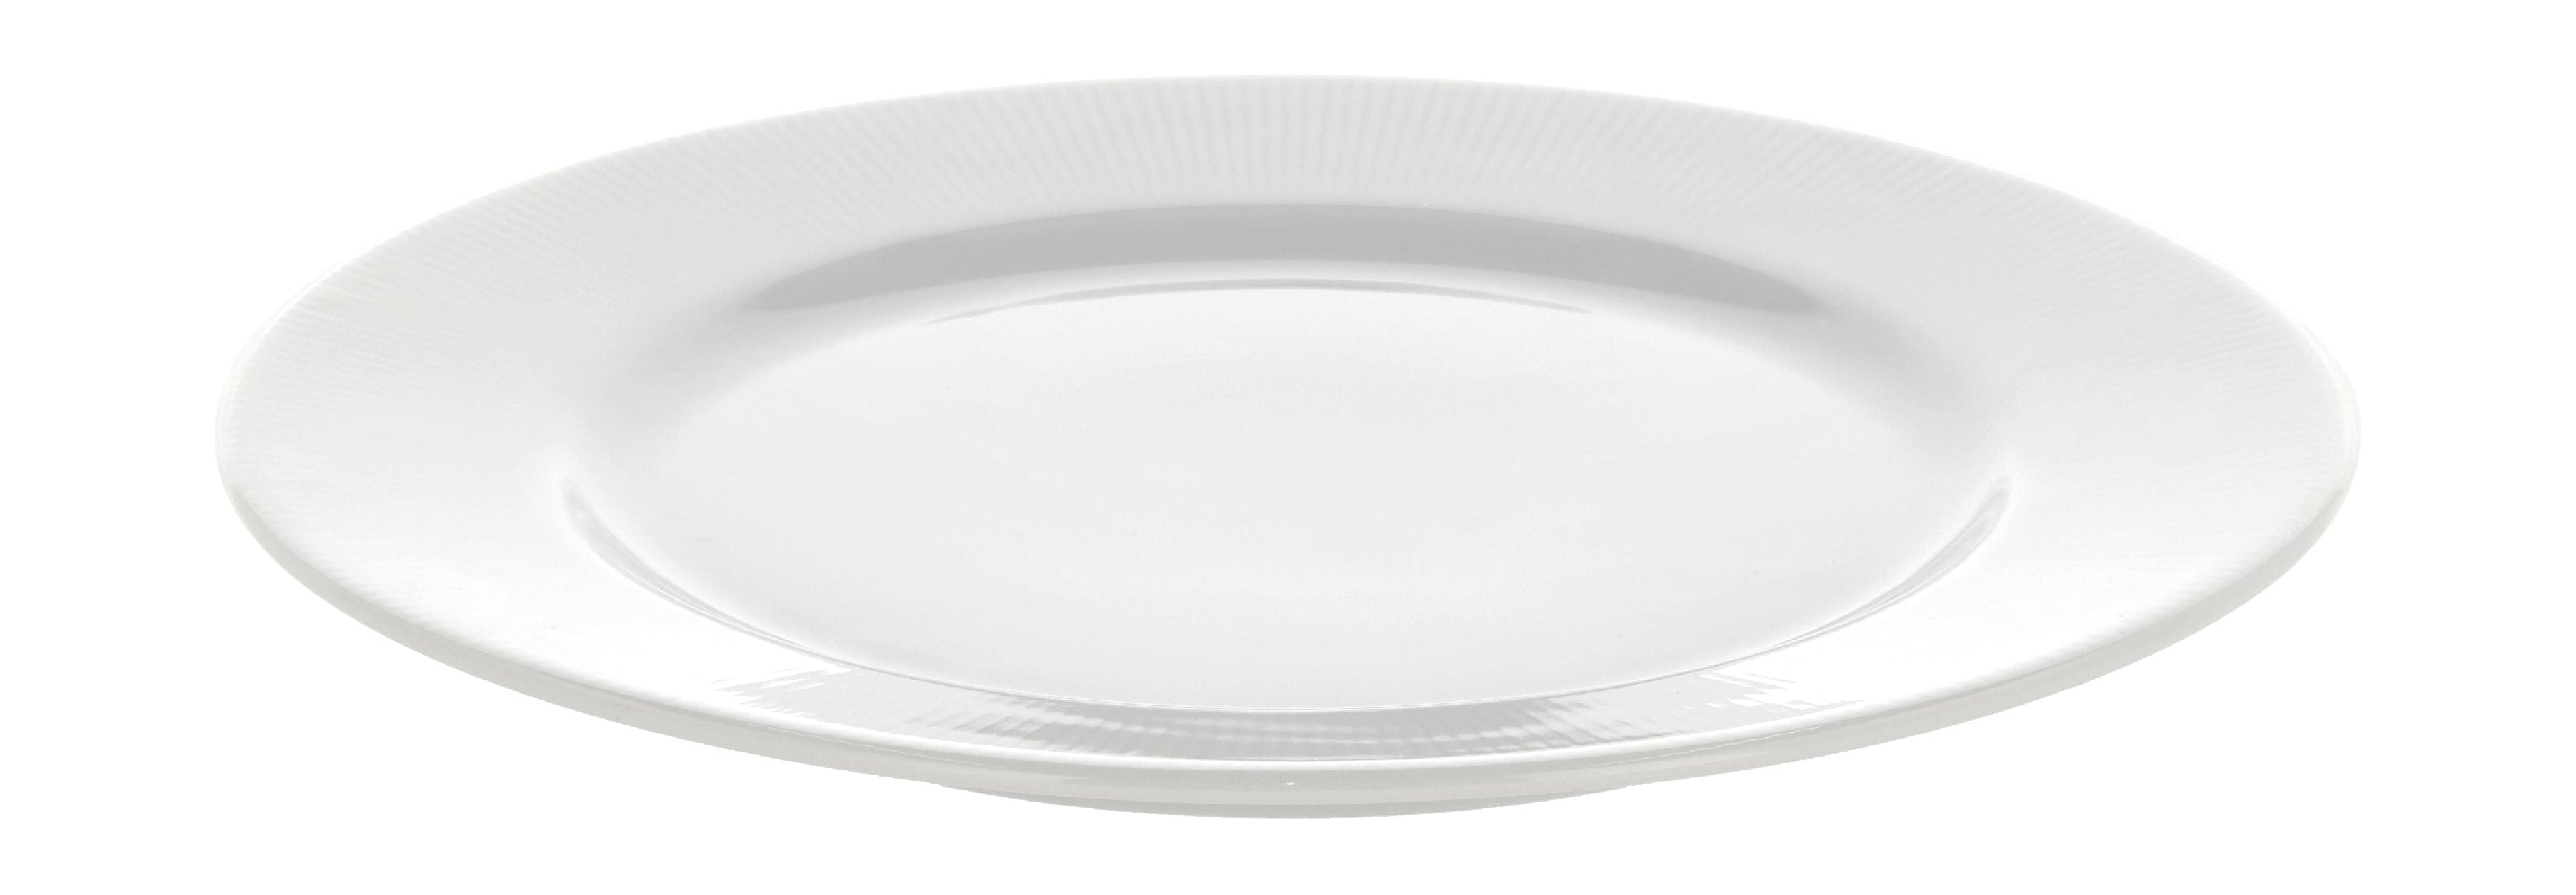 Pillivuyt Eventail Flat Plate With Rim ø22 Cm ,White